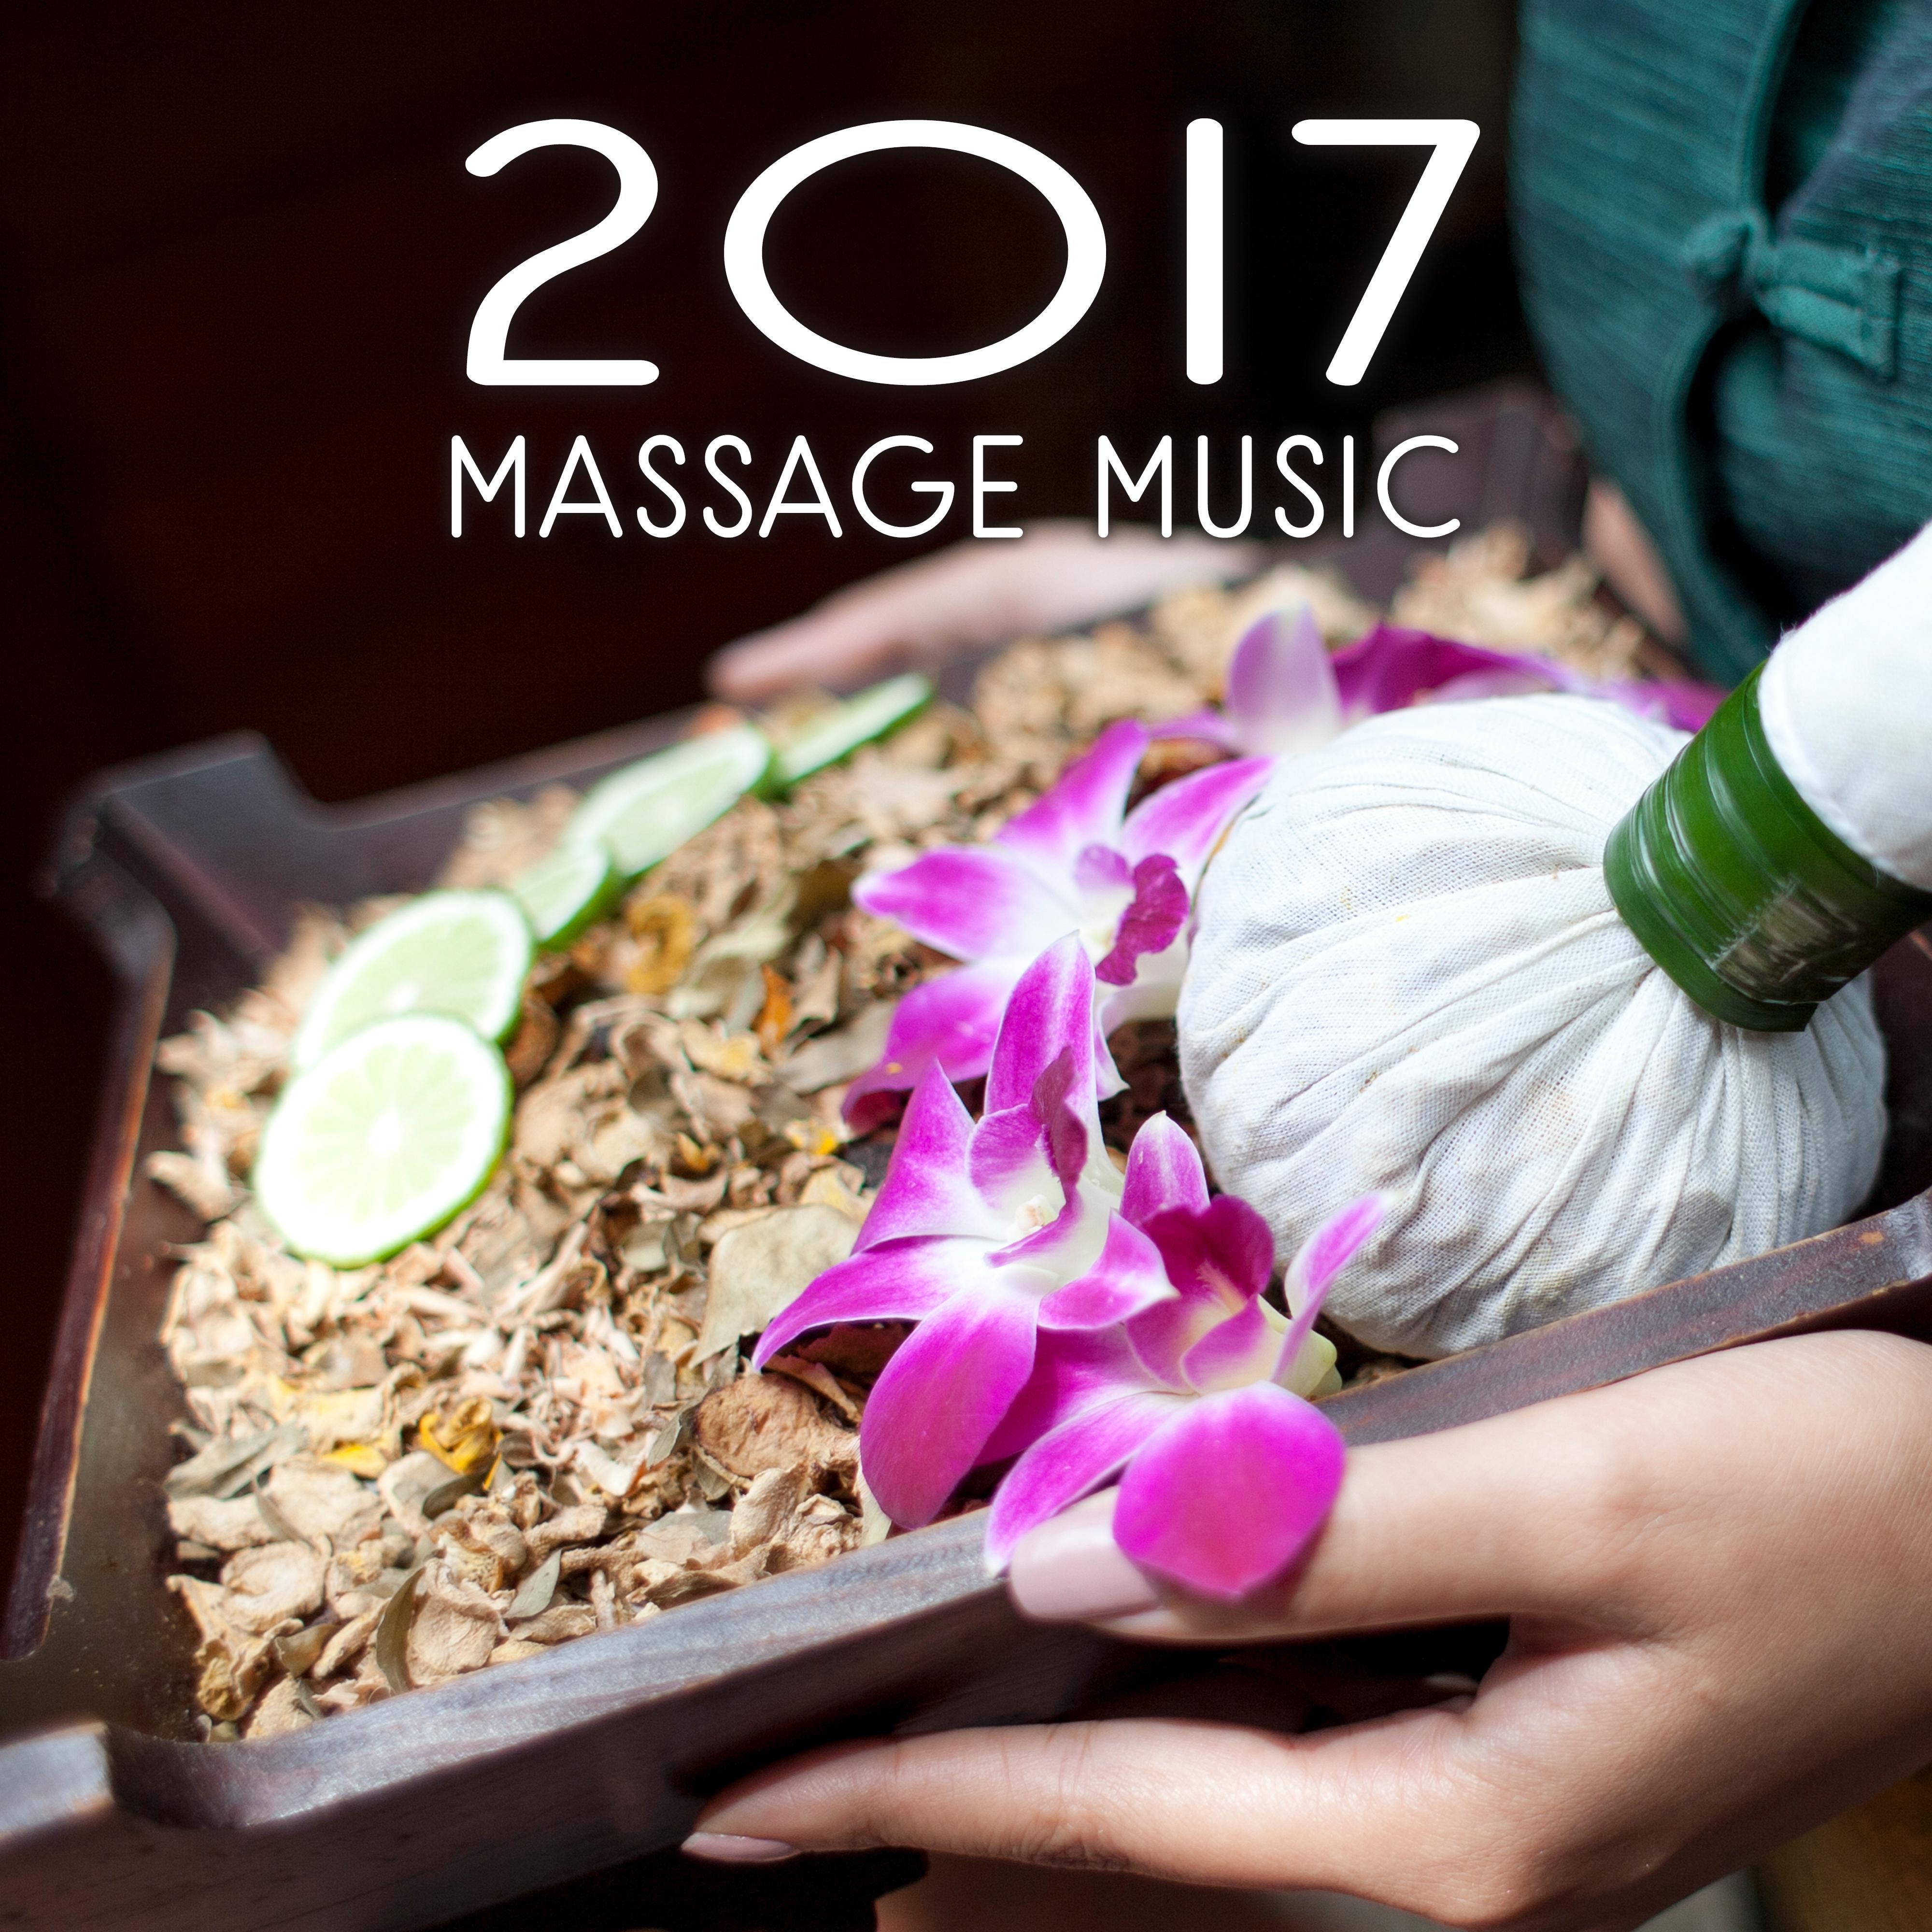 2017: Massage Music – Relaxing Massage Music Therapy, Zen, Healing Nature Sounds, Bliss